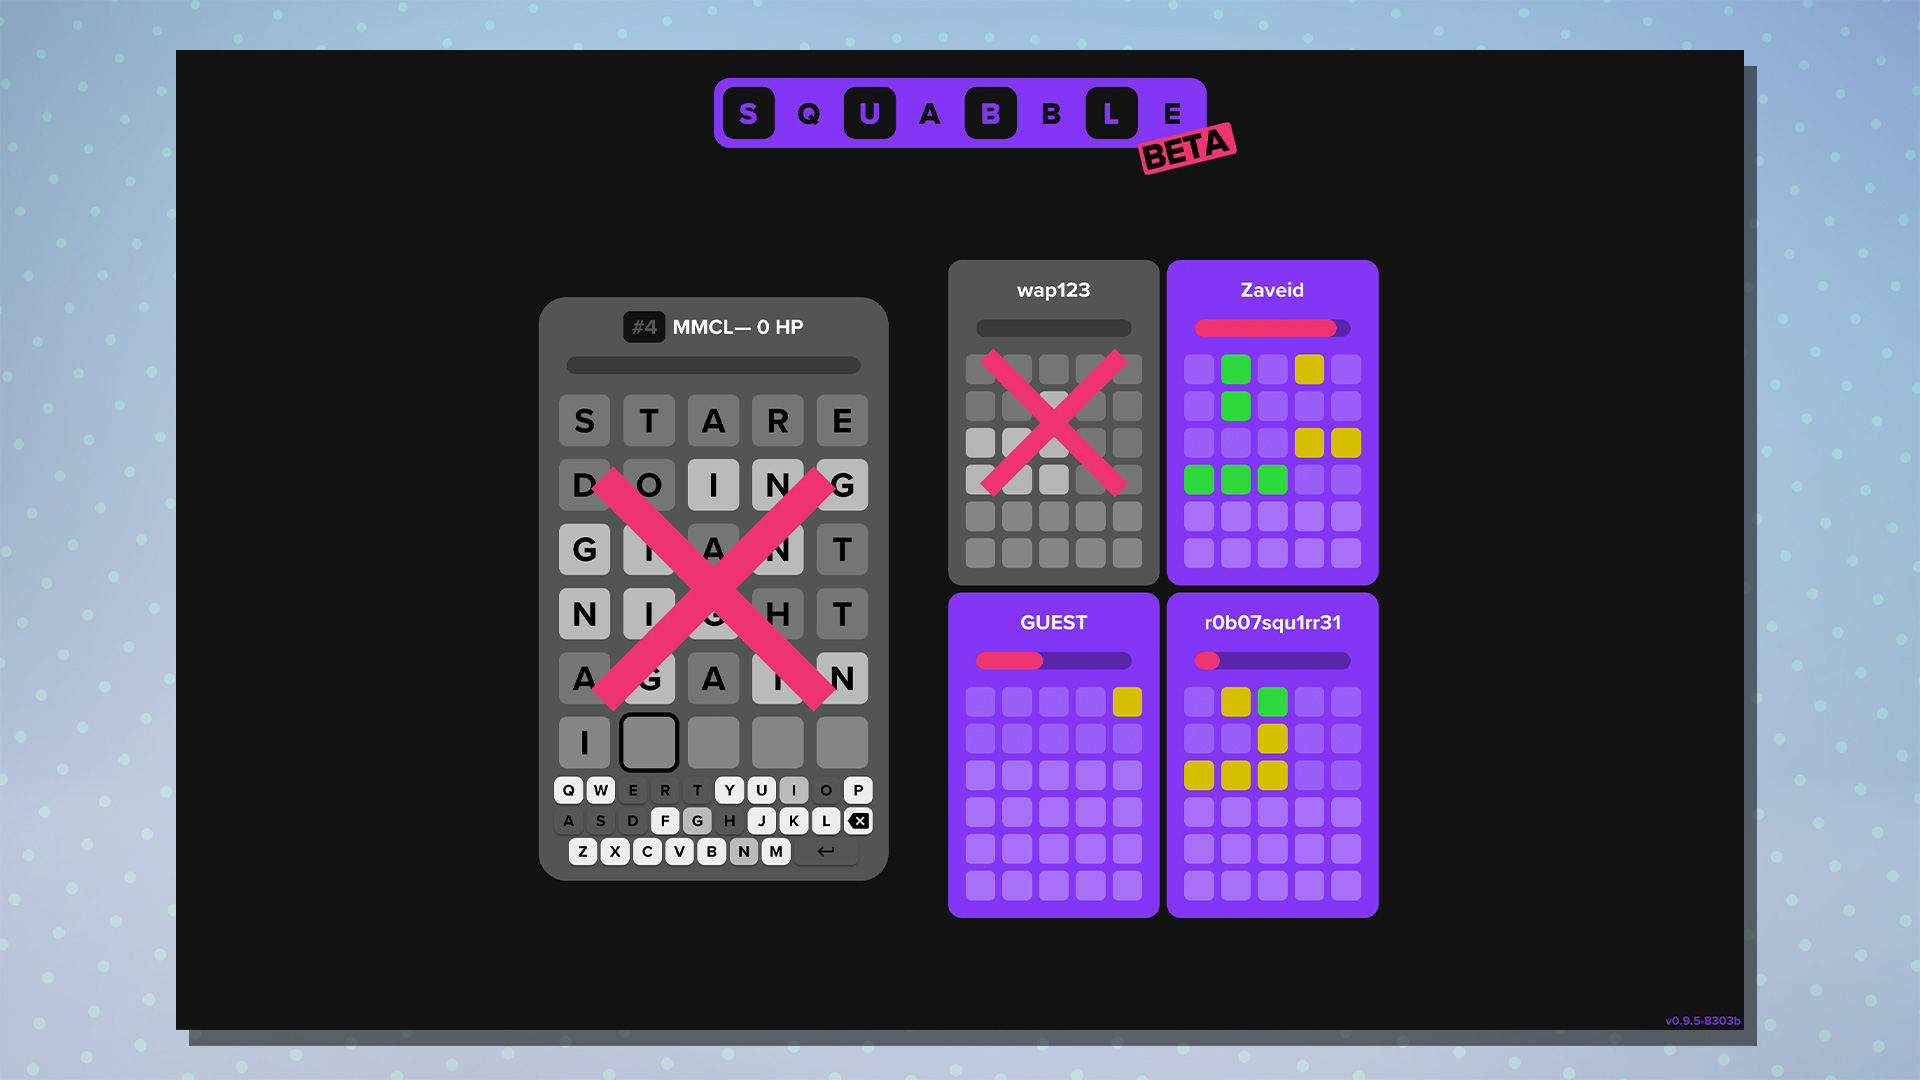 Ein Screenshot des Webspiels Squabble